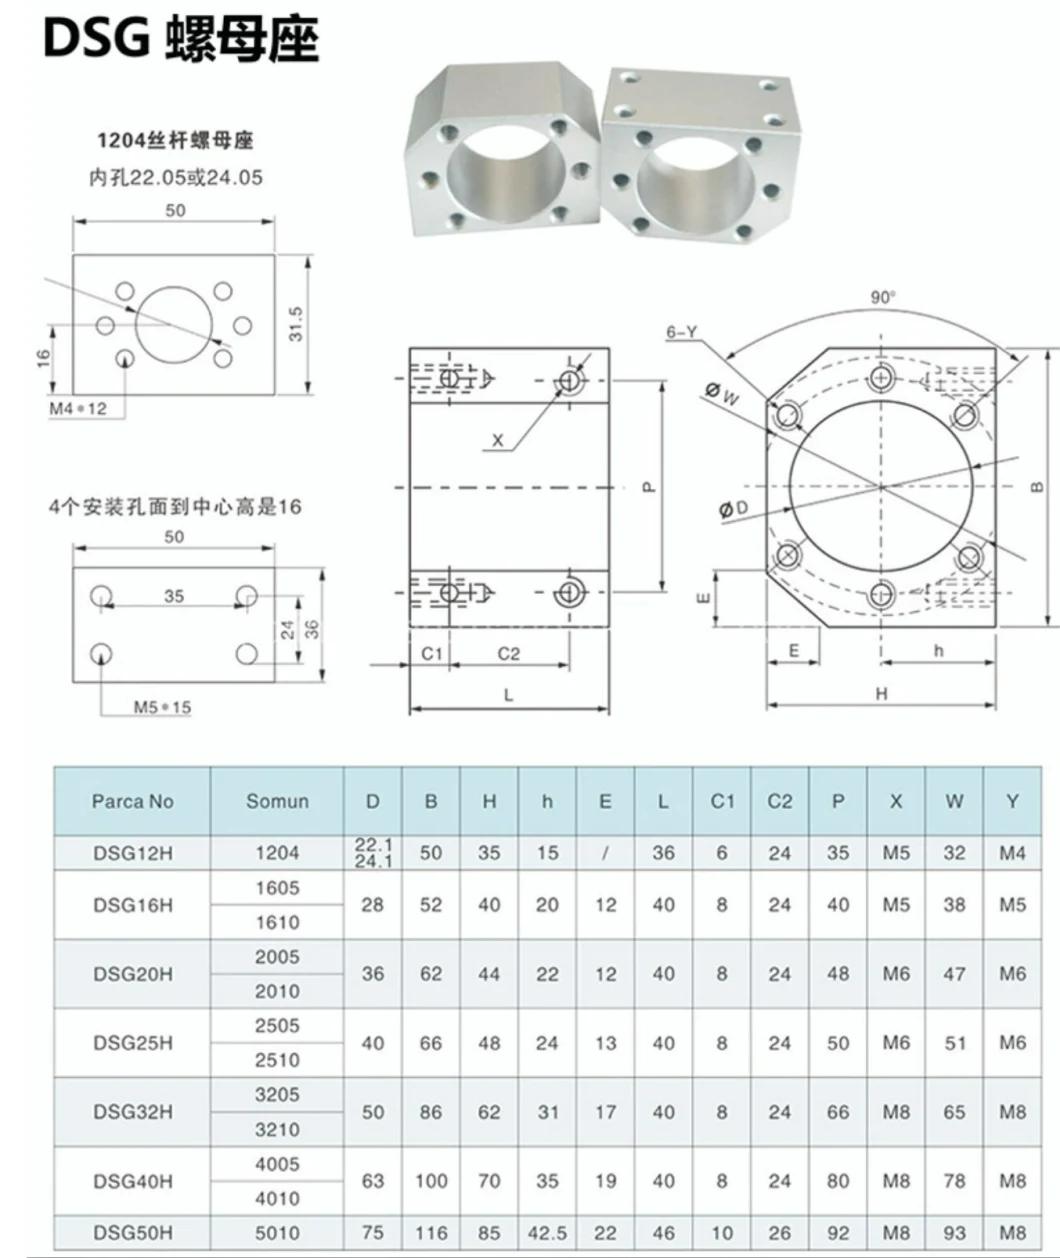 China Factory Aluminum Alloy Ball Screw Nut Mount Bracket Holder Housing Seat for Sfu1204 Sfu1605 Sfu1610 Sfu2005 Sfu2505 Sfu3205 Sfu3210 Sfu4005 Sfu4010